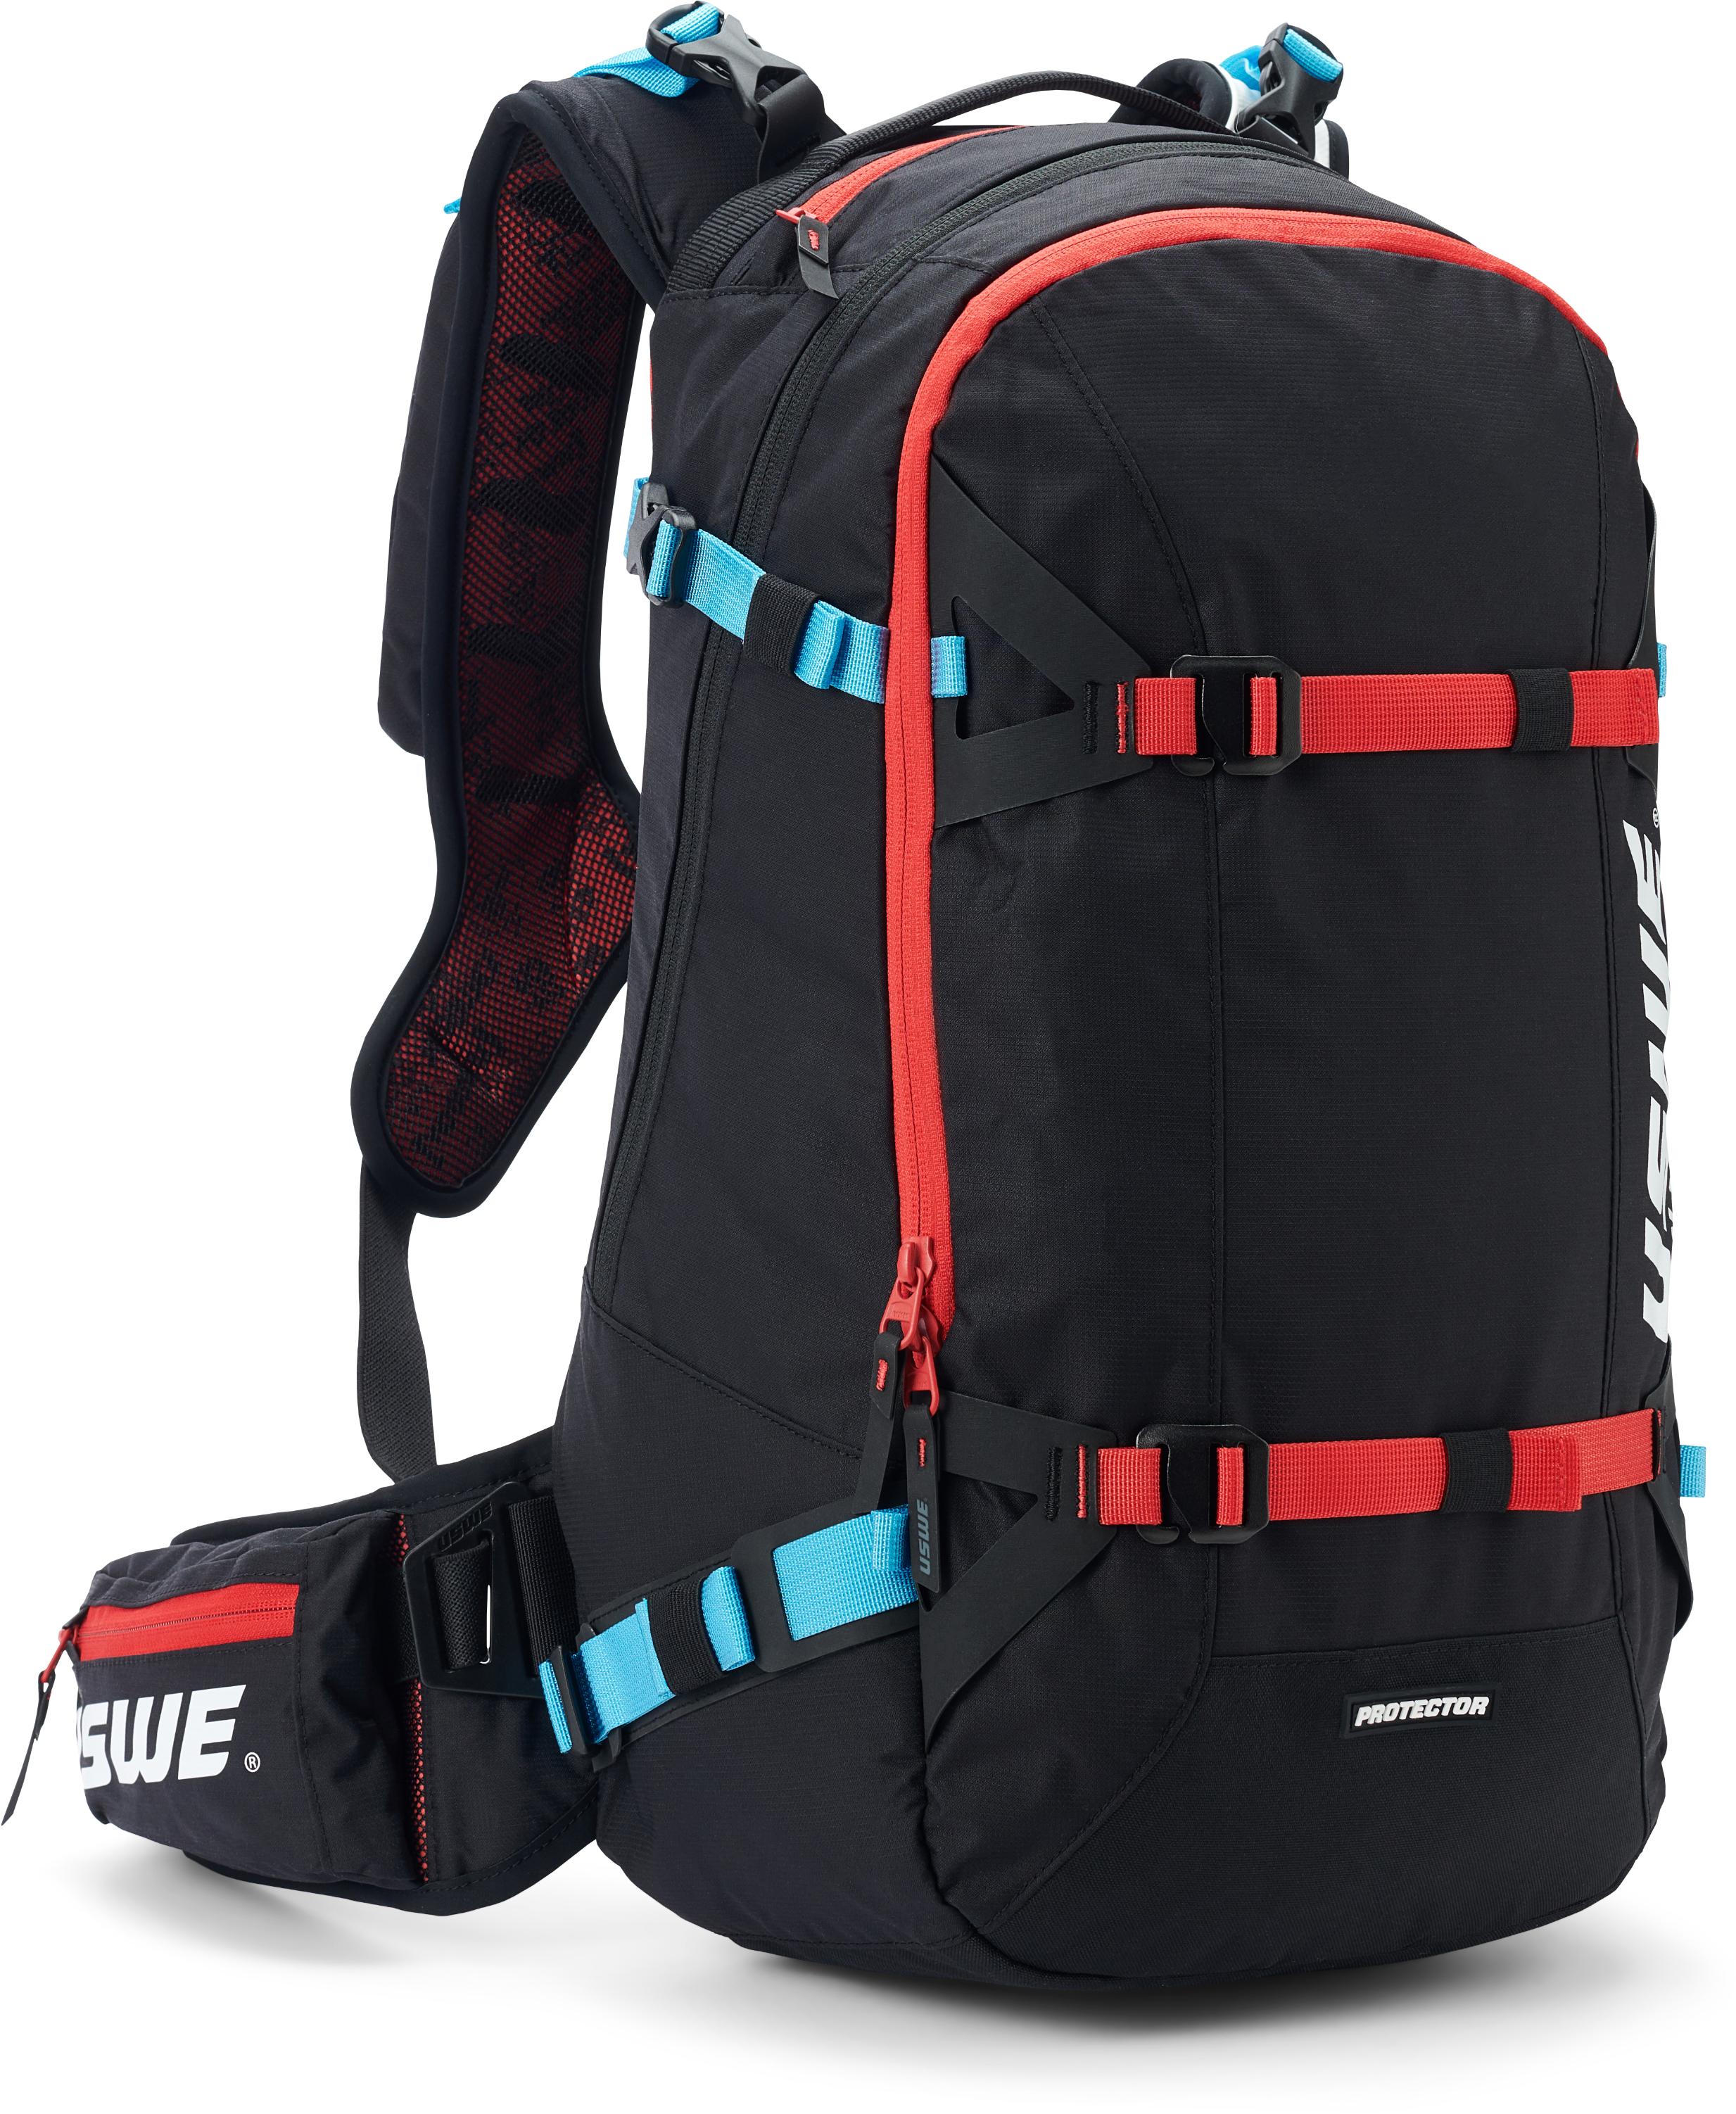 Uswe - USWE POW 25 Wntr Protector Backpack 2253801 - 7350069254023